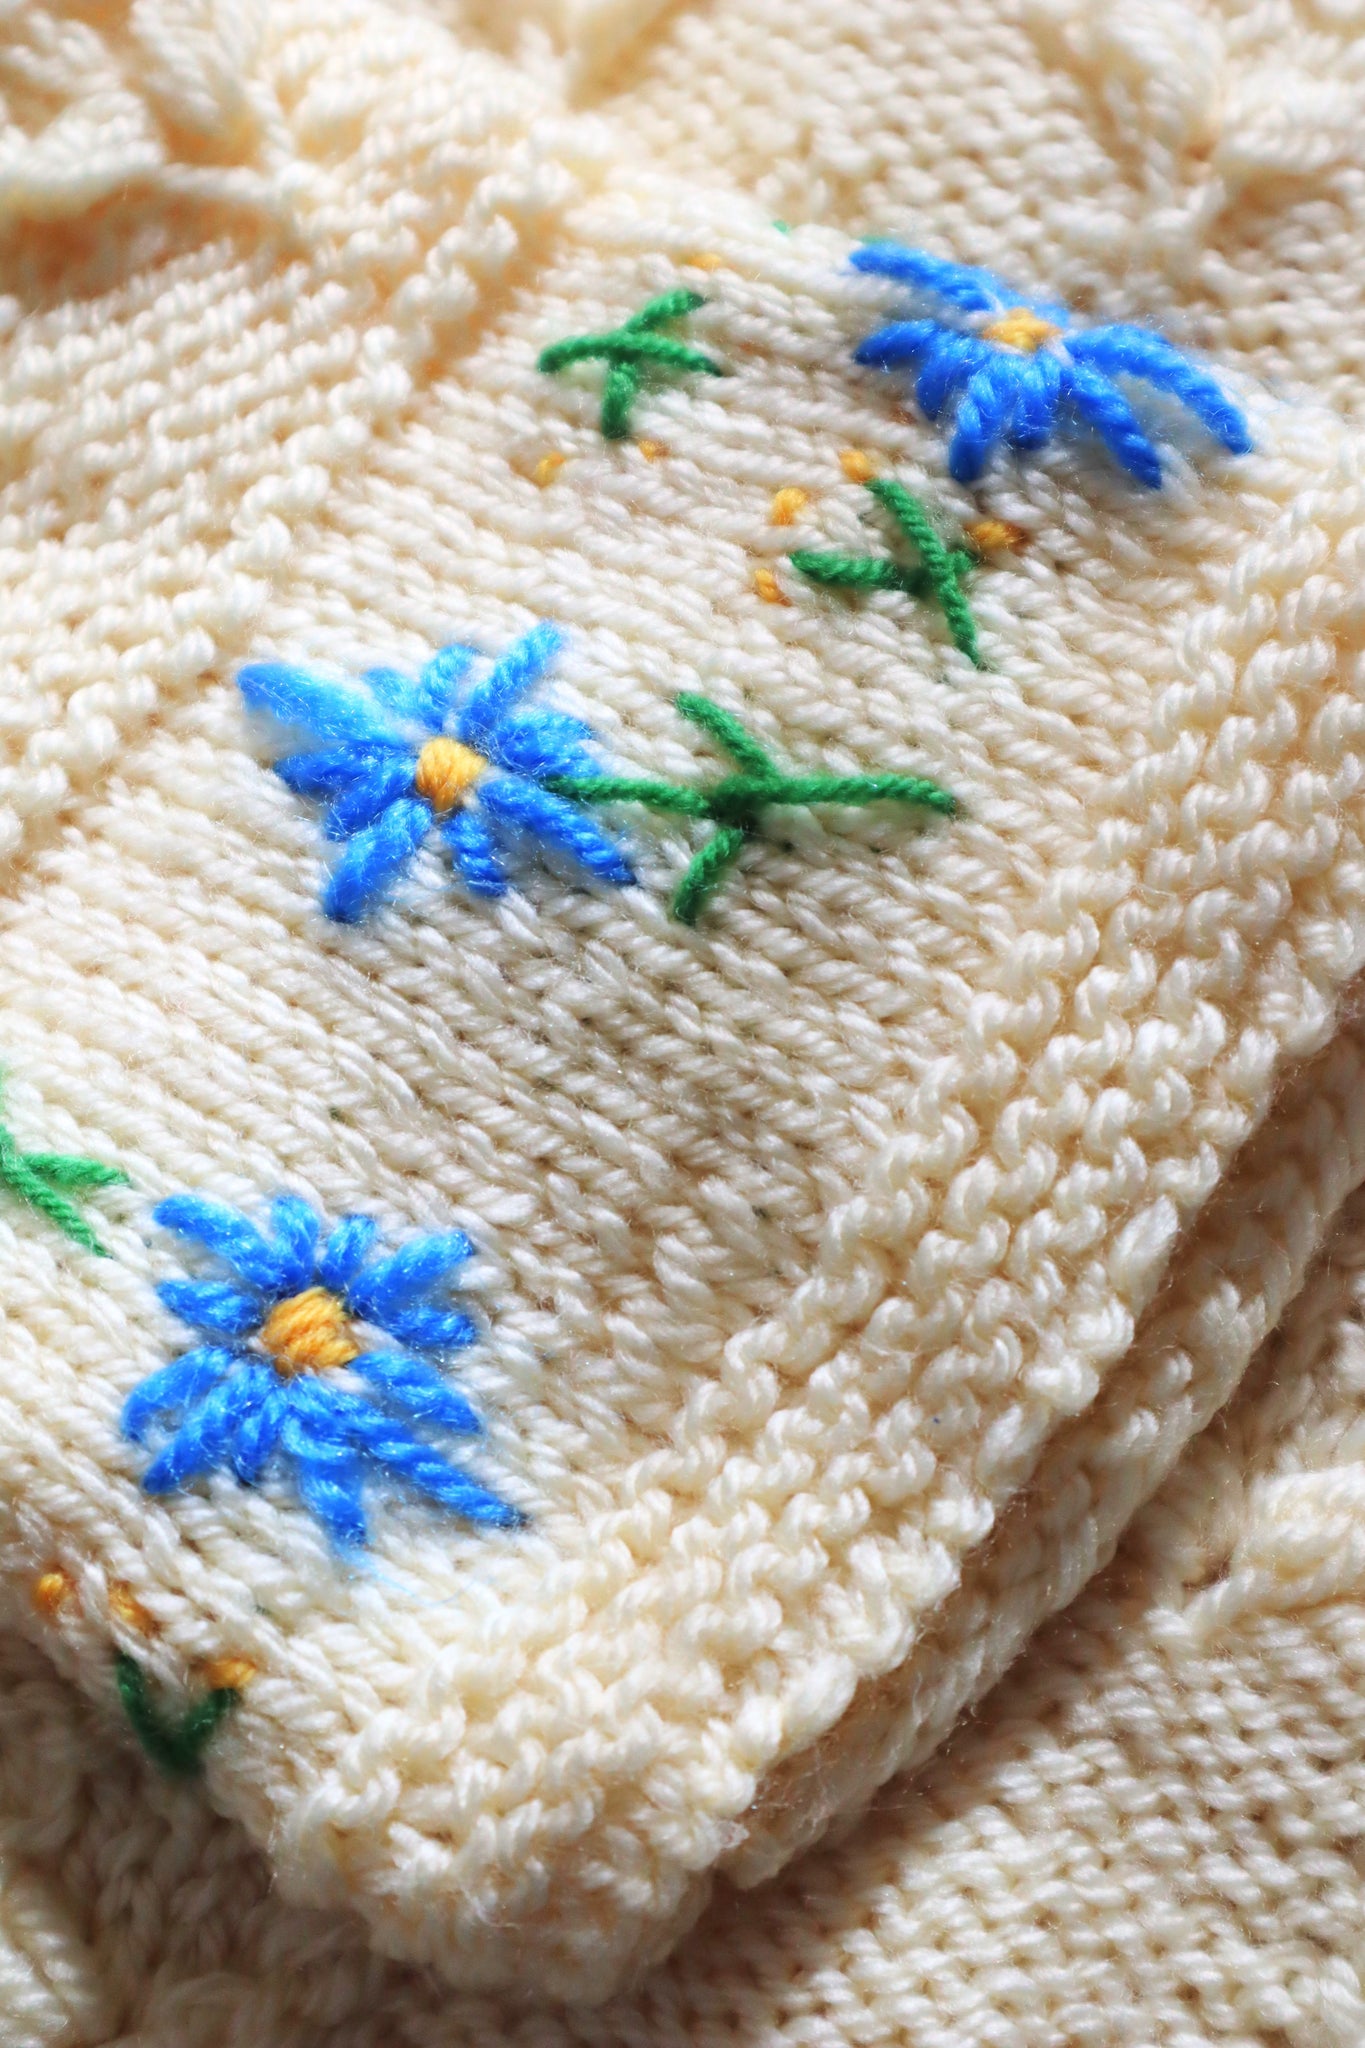 70s Blue Flower Embroidery Hand Knit Cream Austrian Cardigan